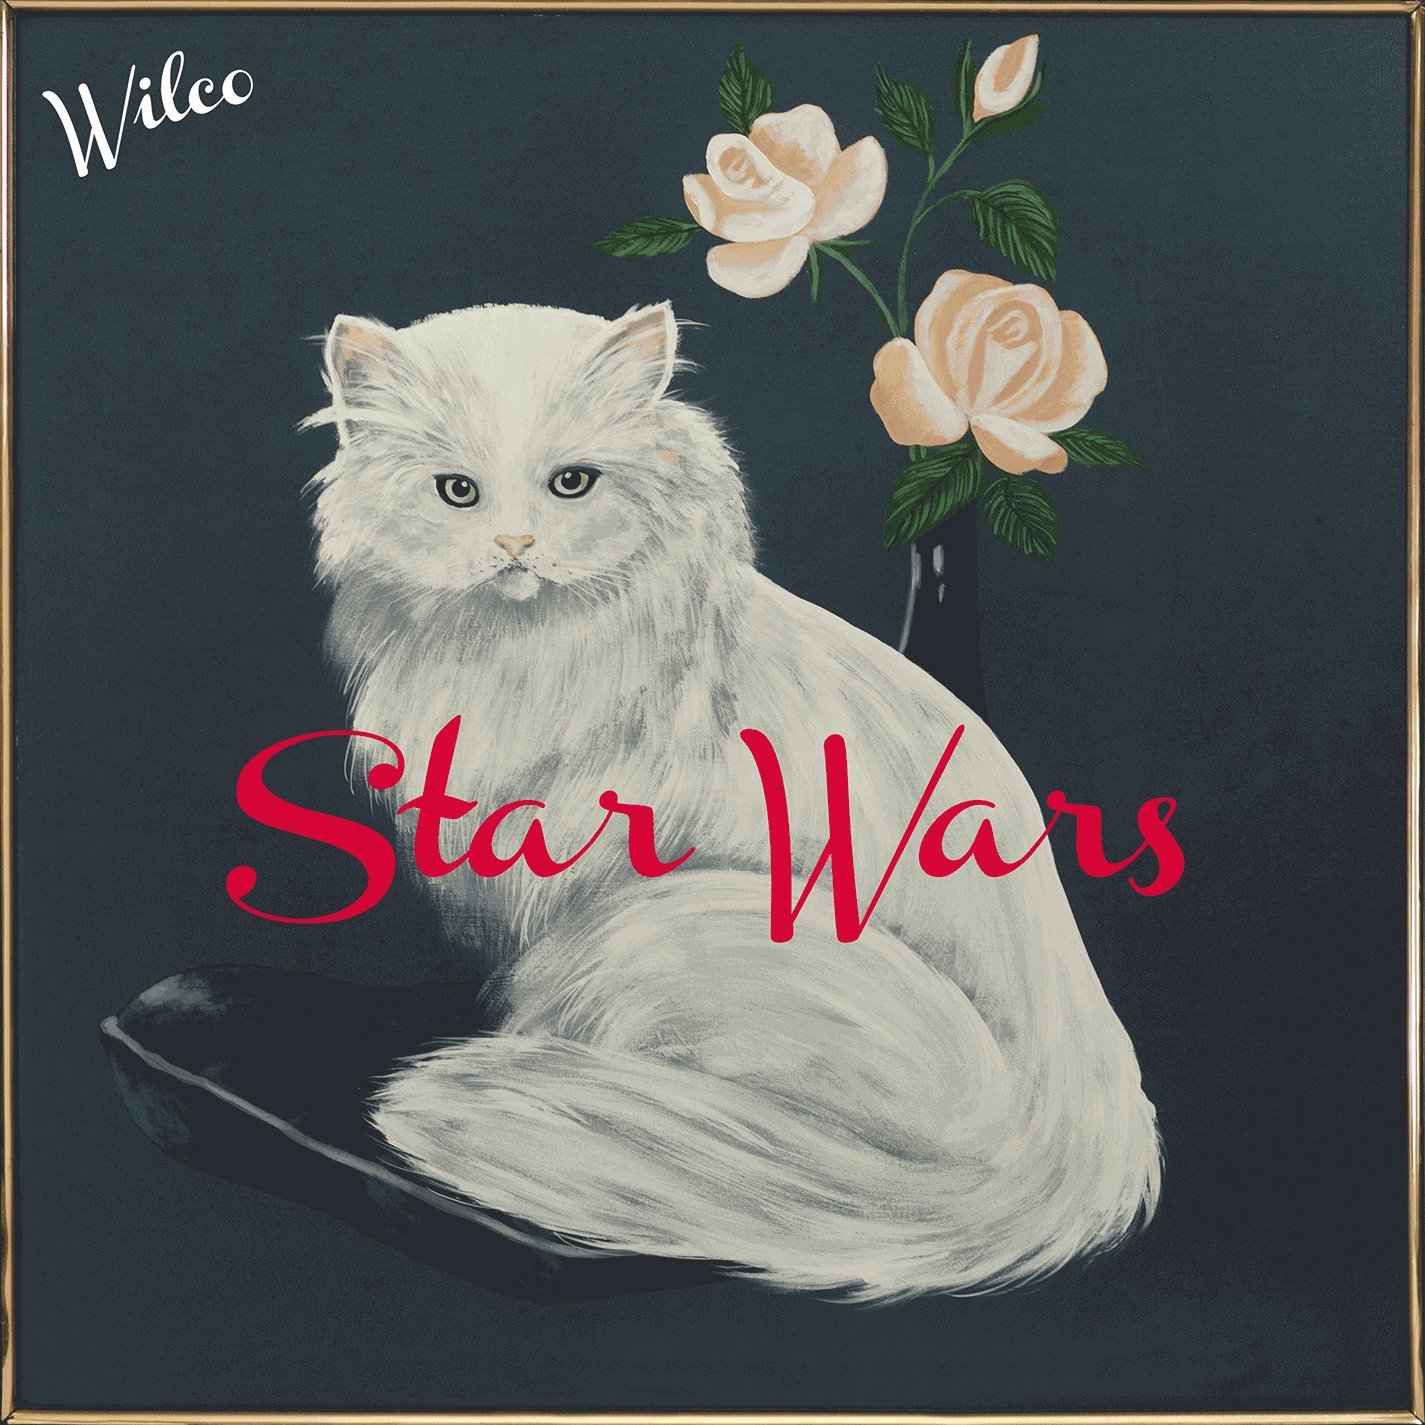 Wilco - Star Wars (2015) [HDTracks 24bit/44.1kHz]